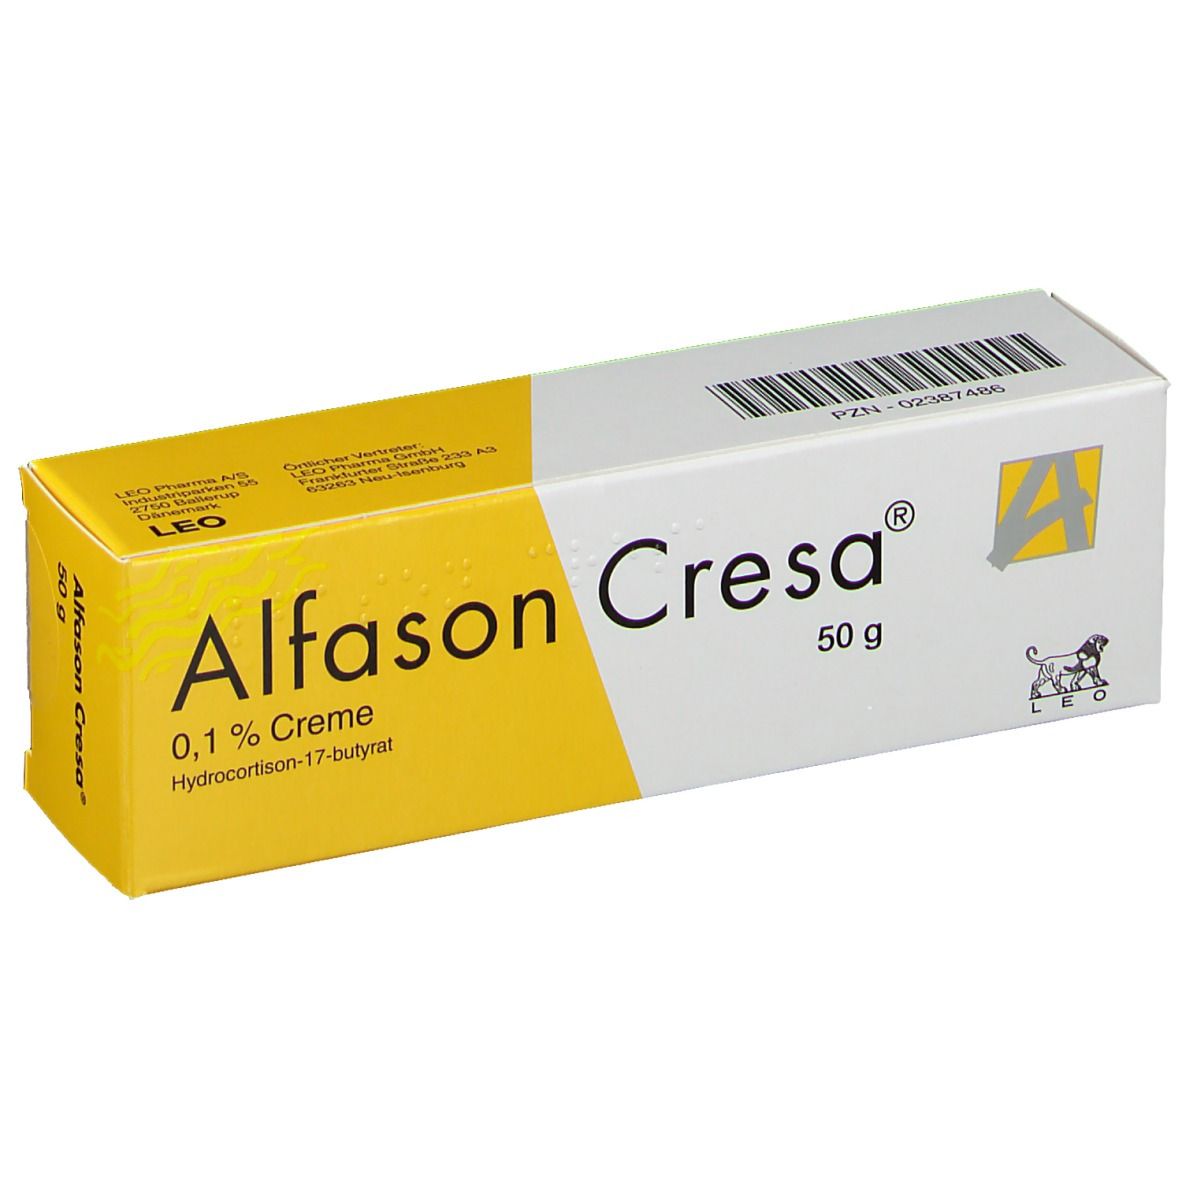 Alfason® Cresa Creme